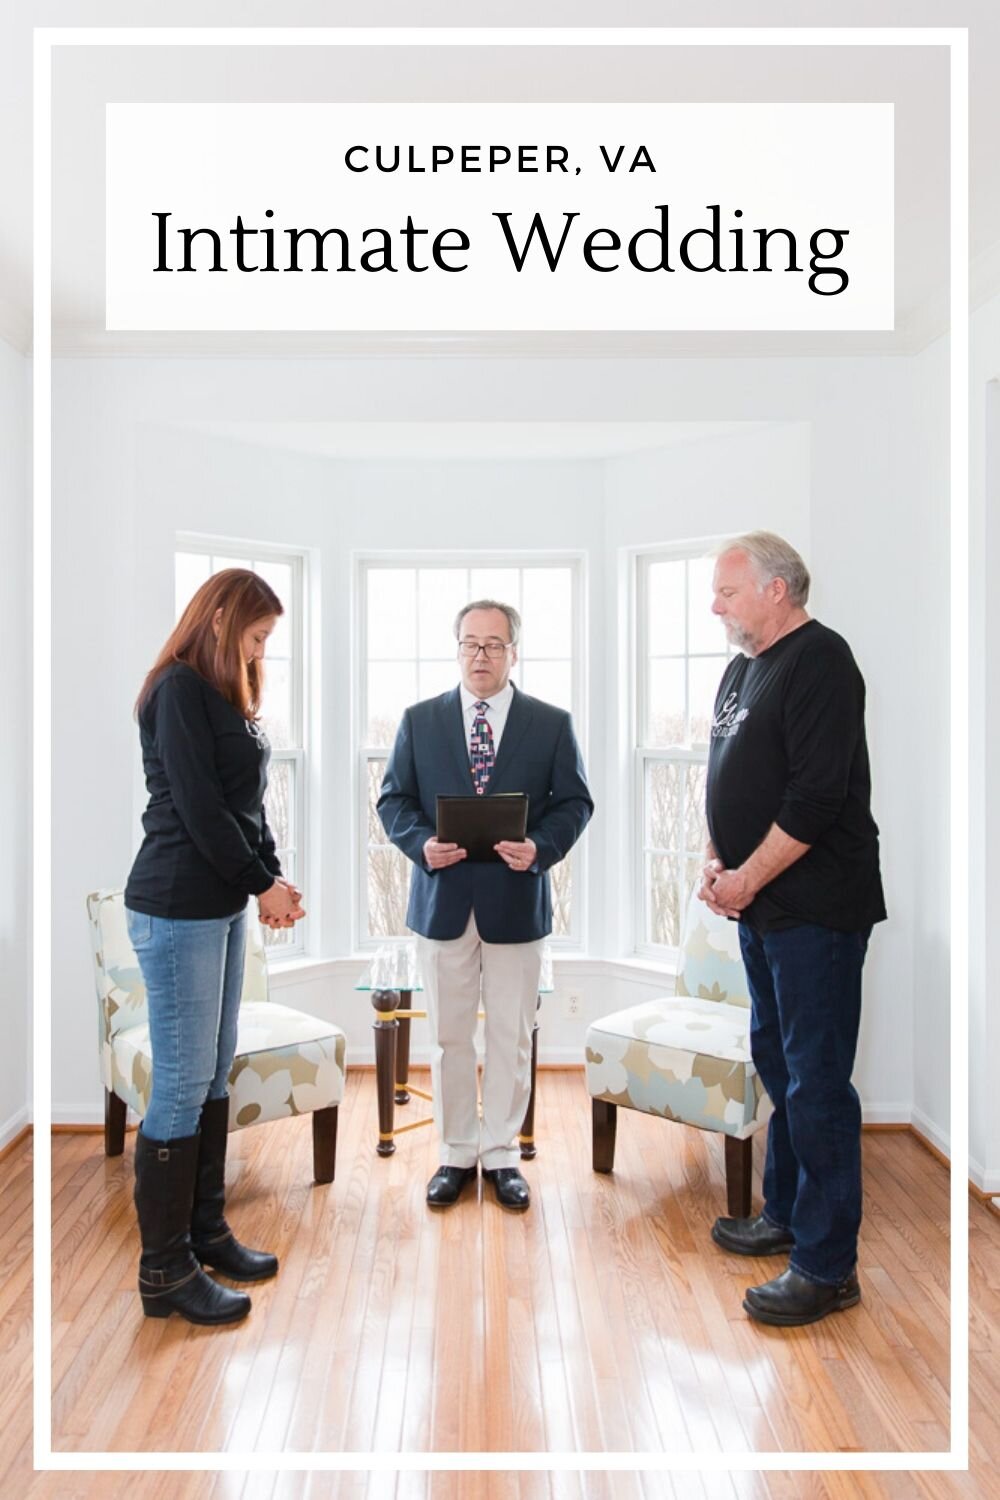 Intimate wedding in Culpeper